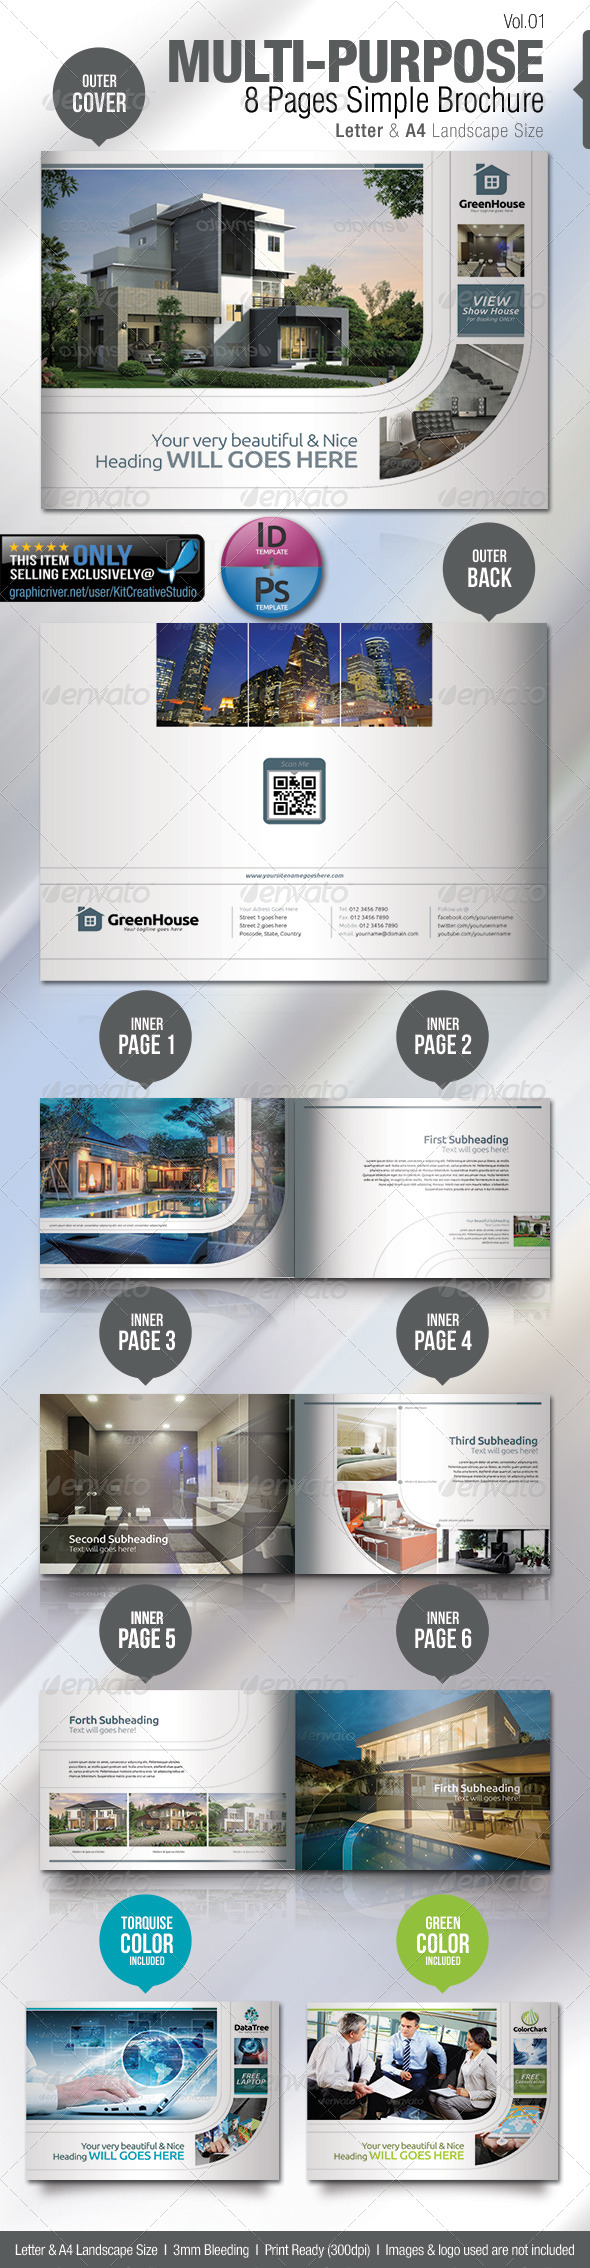 Multi-purpose 8 Pages Simple Brochure